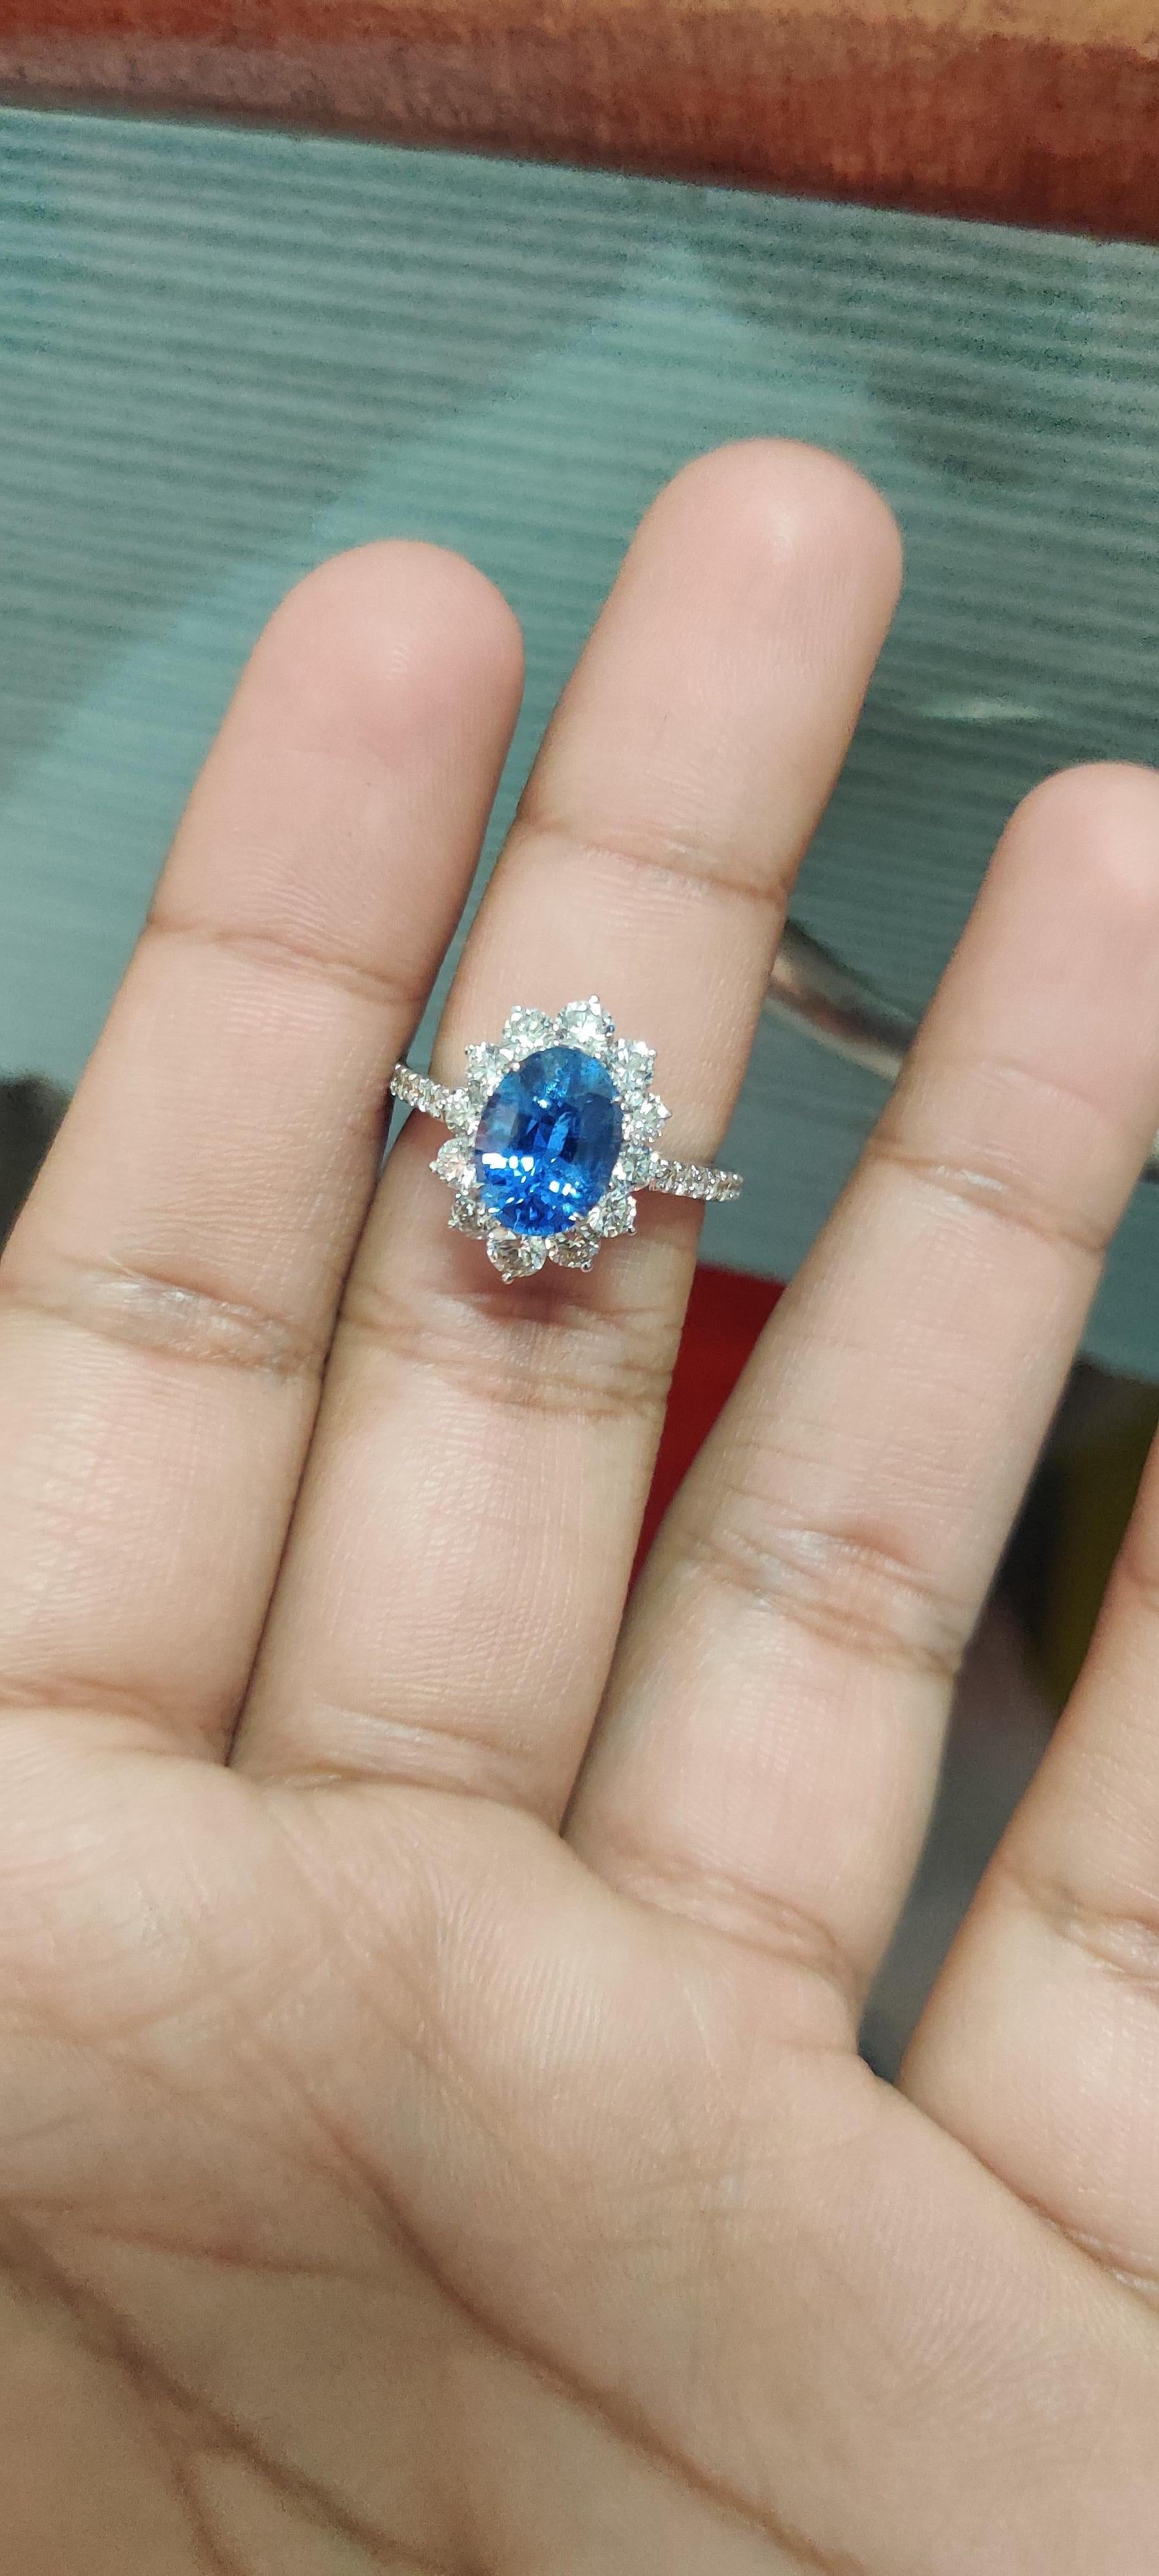 Oval Cut 3.66 Carat Ceylon Blue Sapphire Diamond Ring For Sale